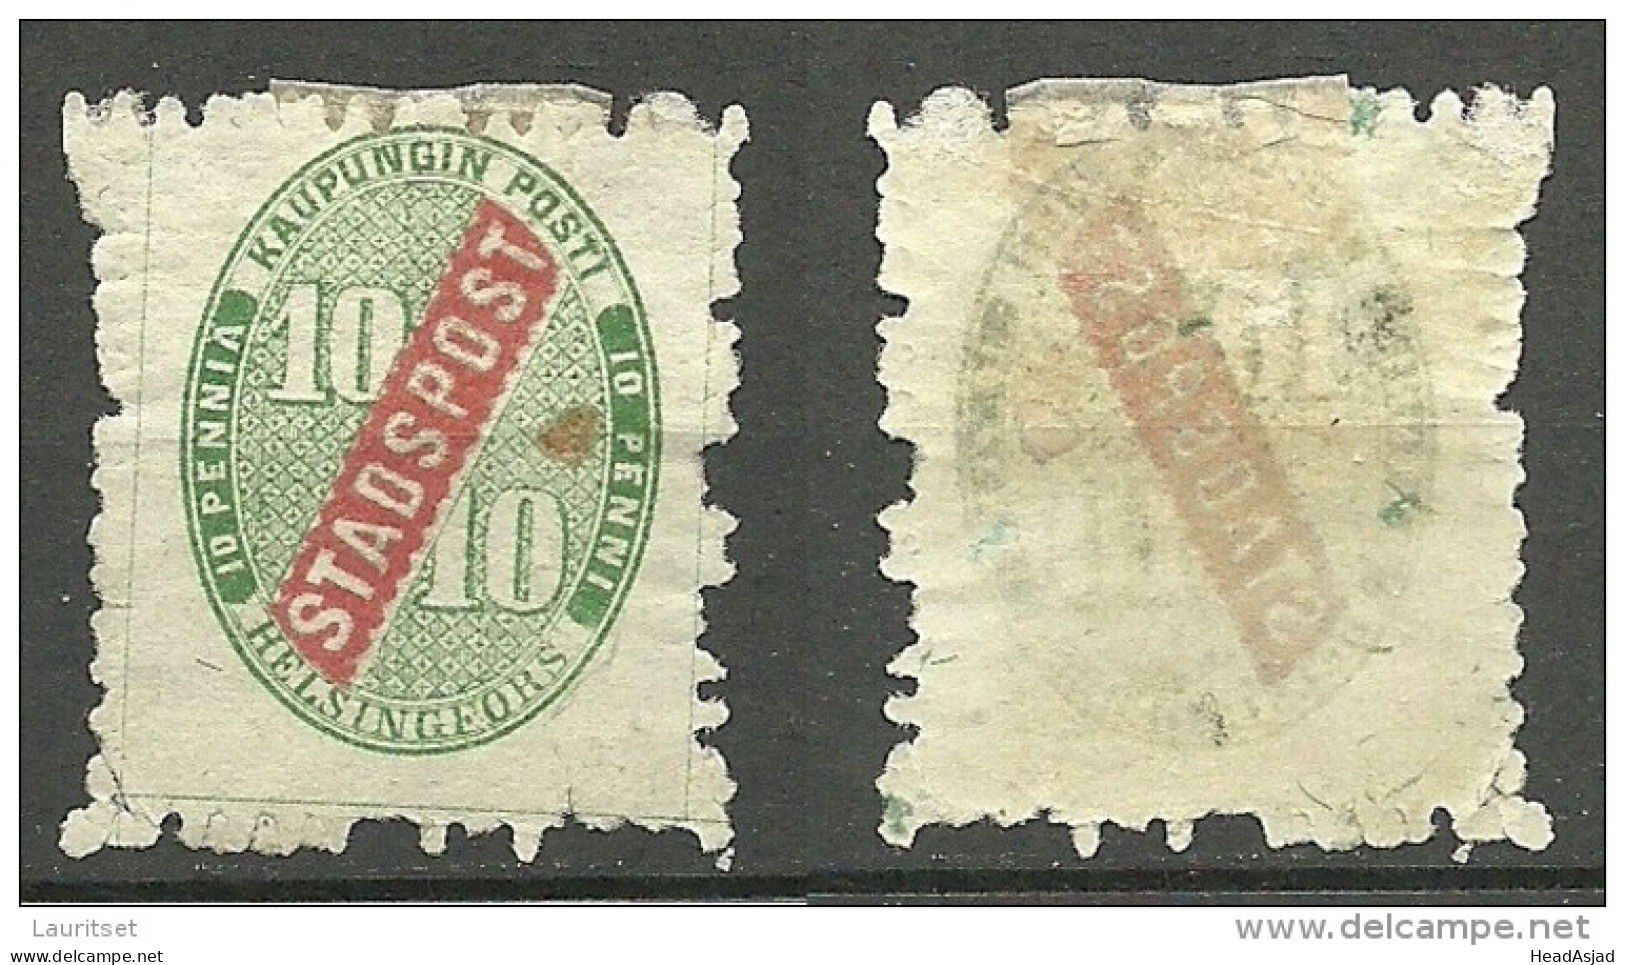 FINLAND HELSINKI 1866/68 Local City Post Stadtpost 10 Pen * - Local Post Stamps